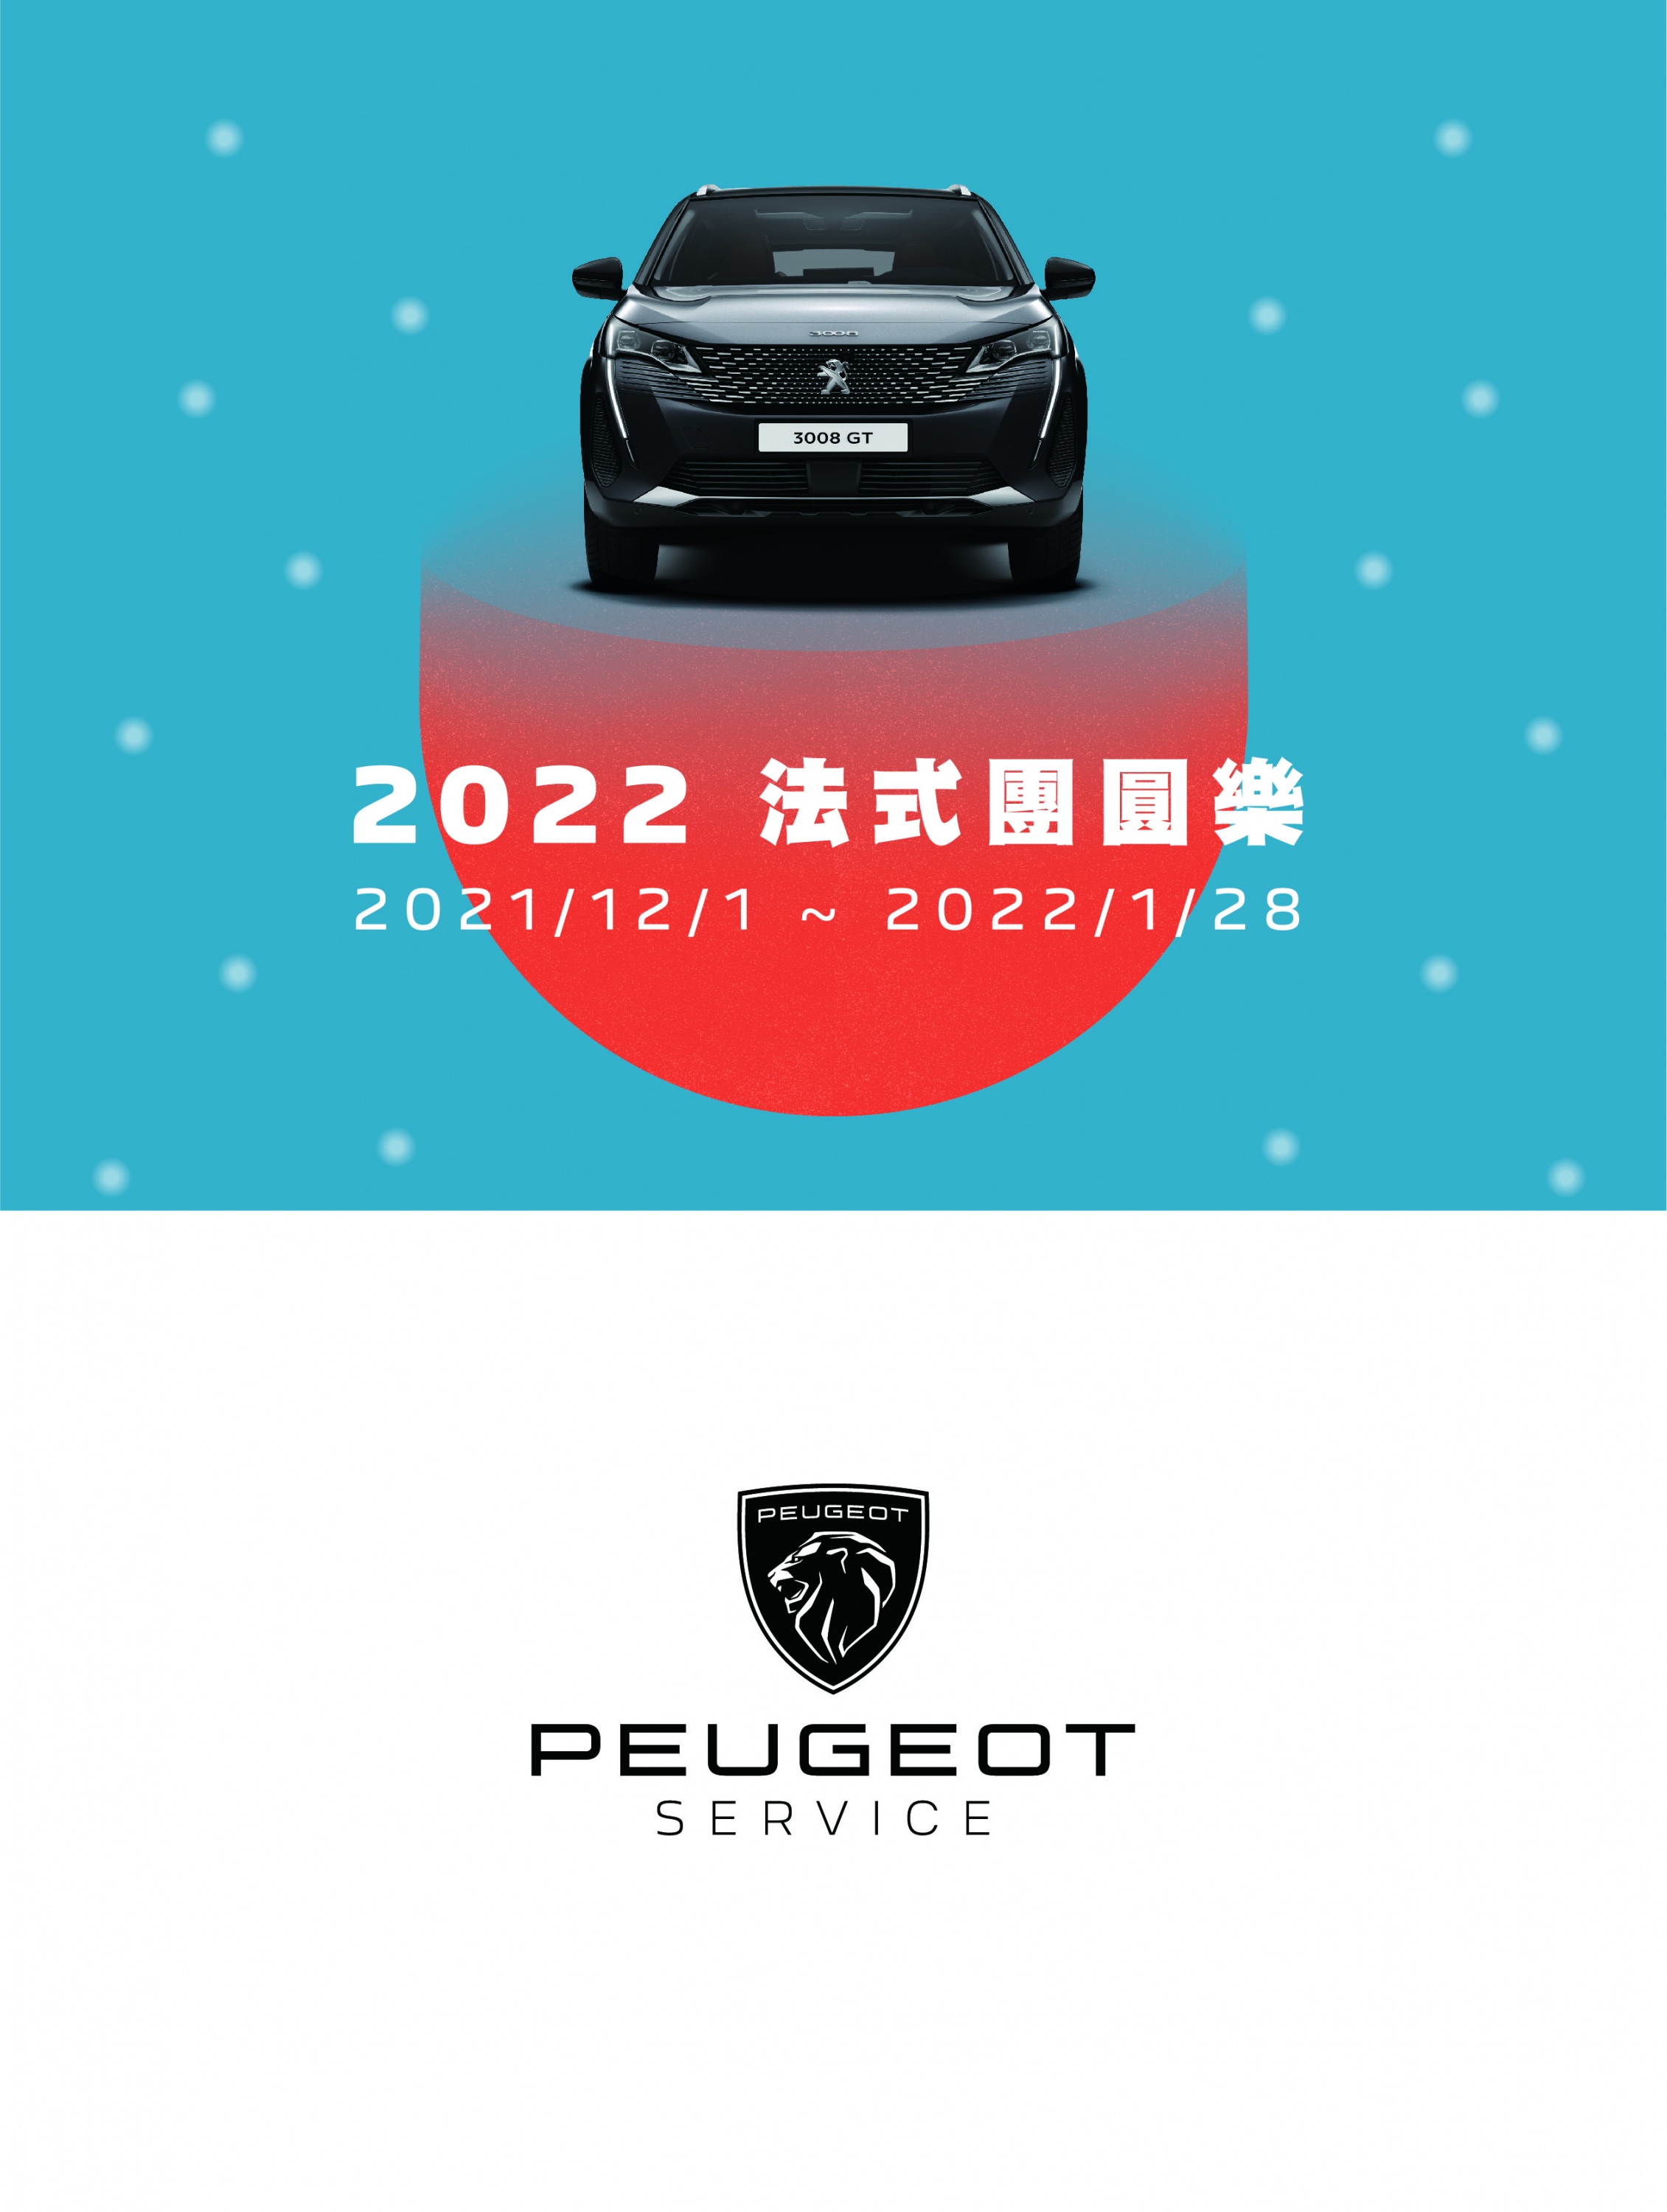 2022 PEUGEOT 法式團圓樂.jpg